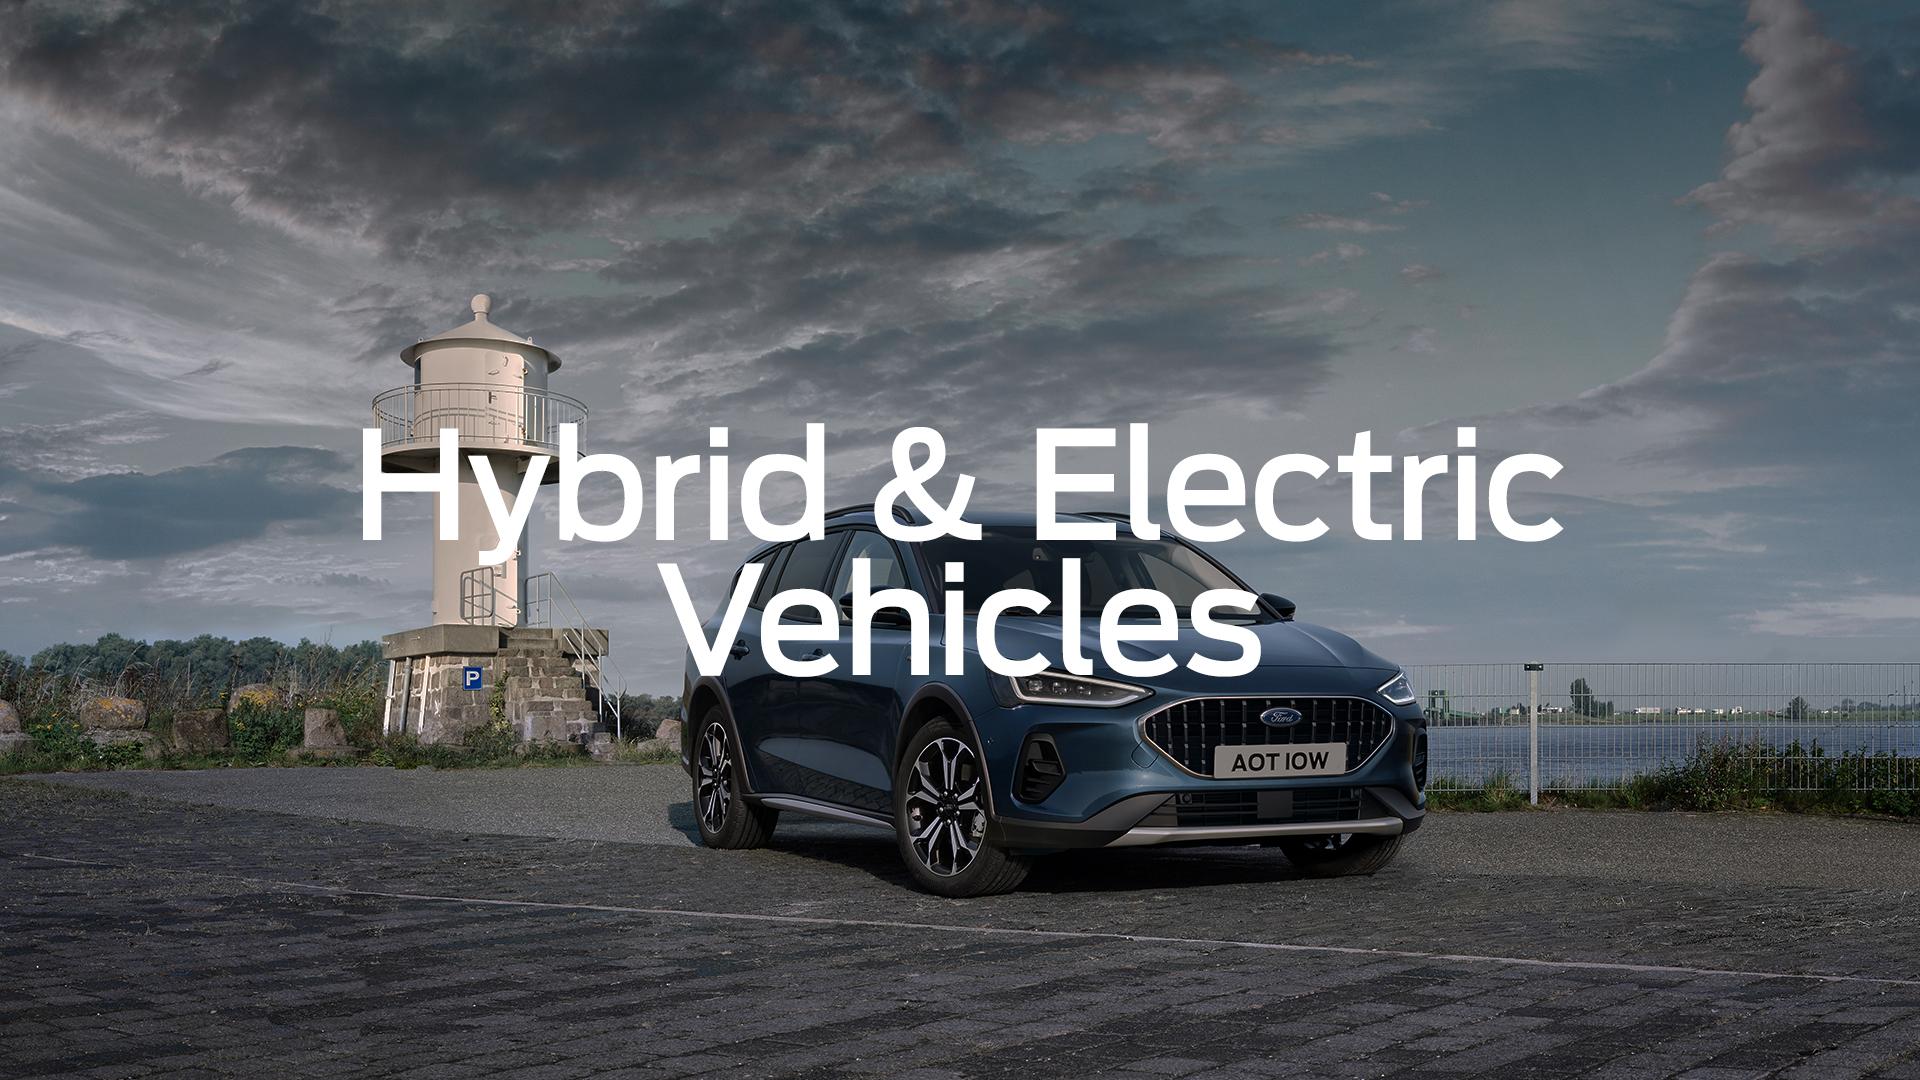 Hybrid & Electric Vehicles